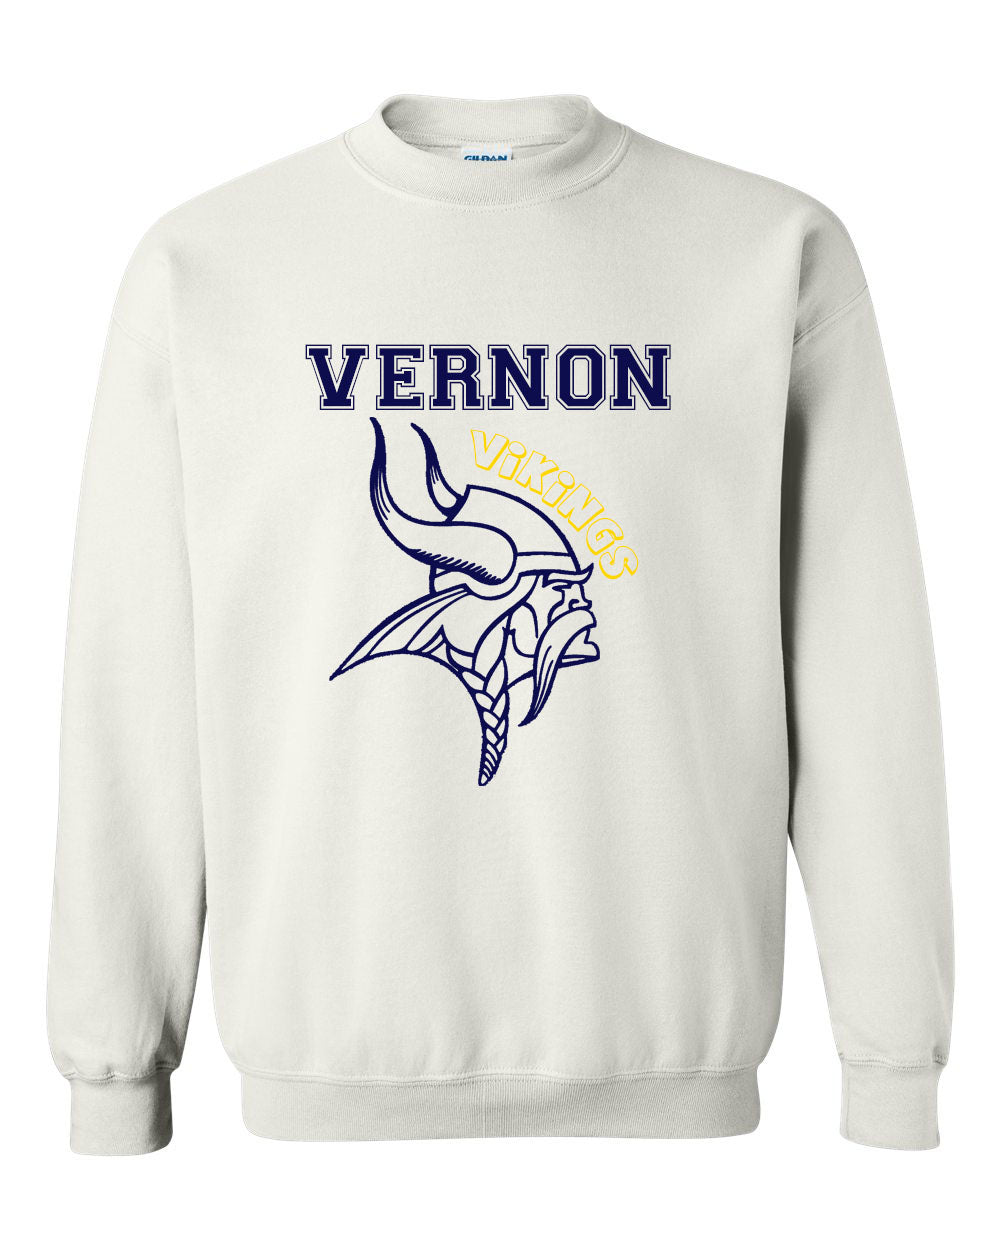 Vernon design 6 non hooded sweatshirt